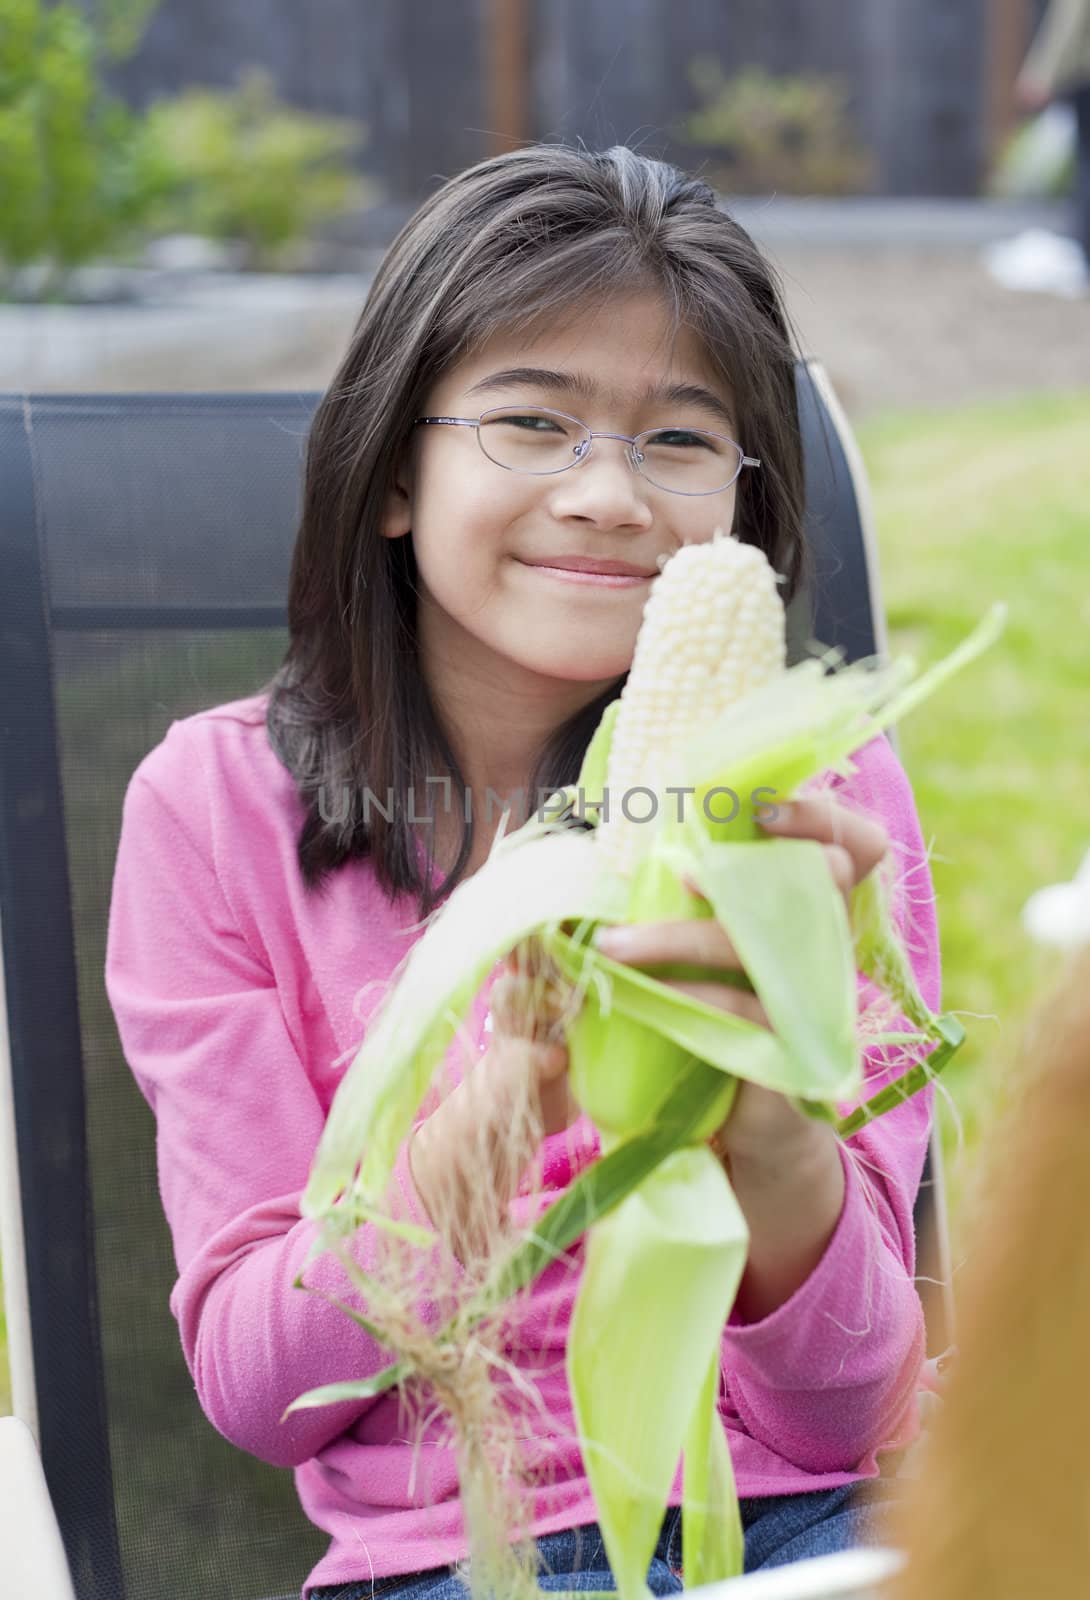 Girl peeling husk off corn cob by jarenwicklund